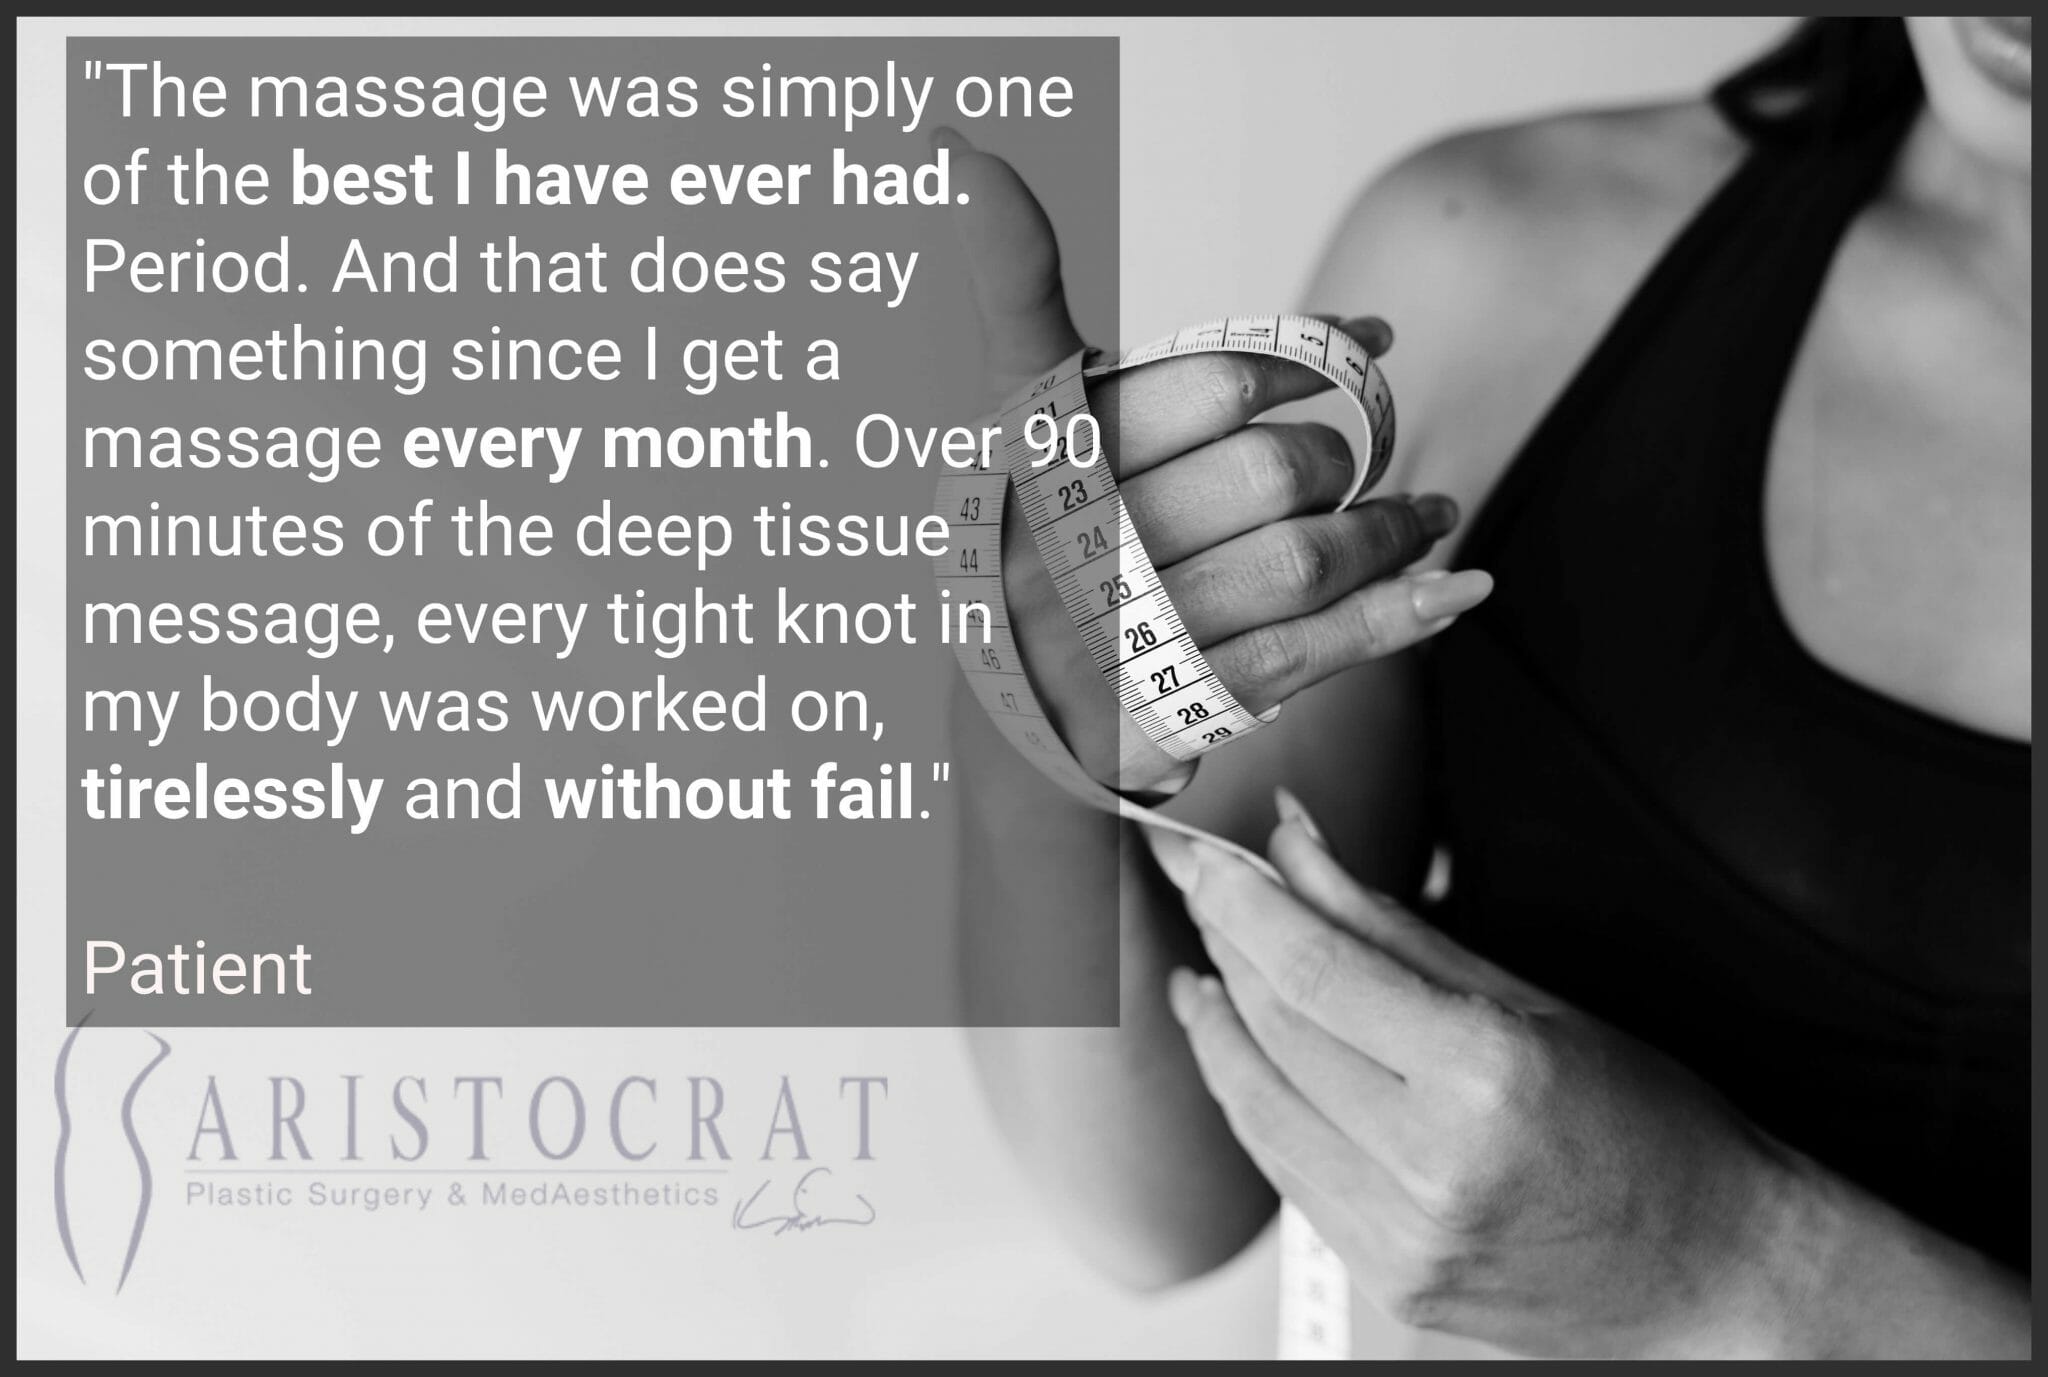 Patient testimonial on lymphatic massage5